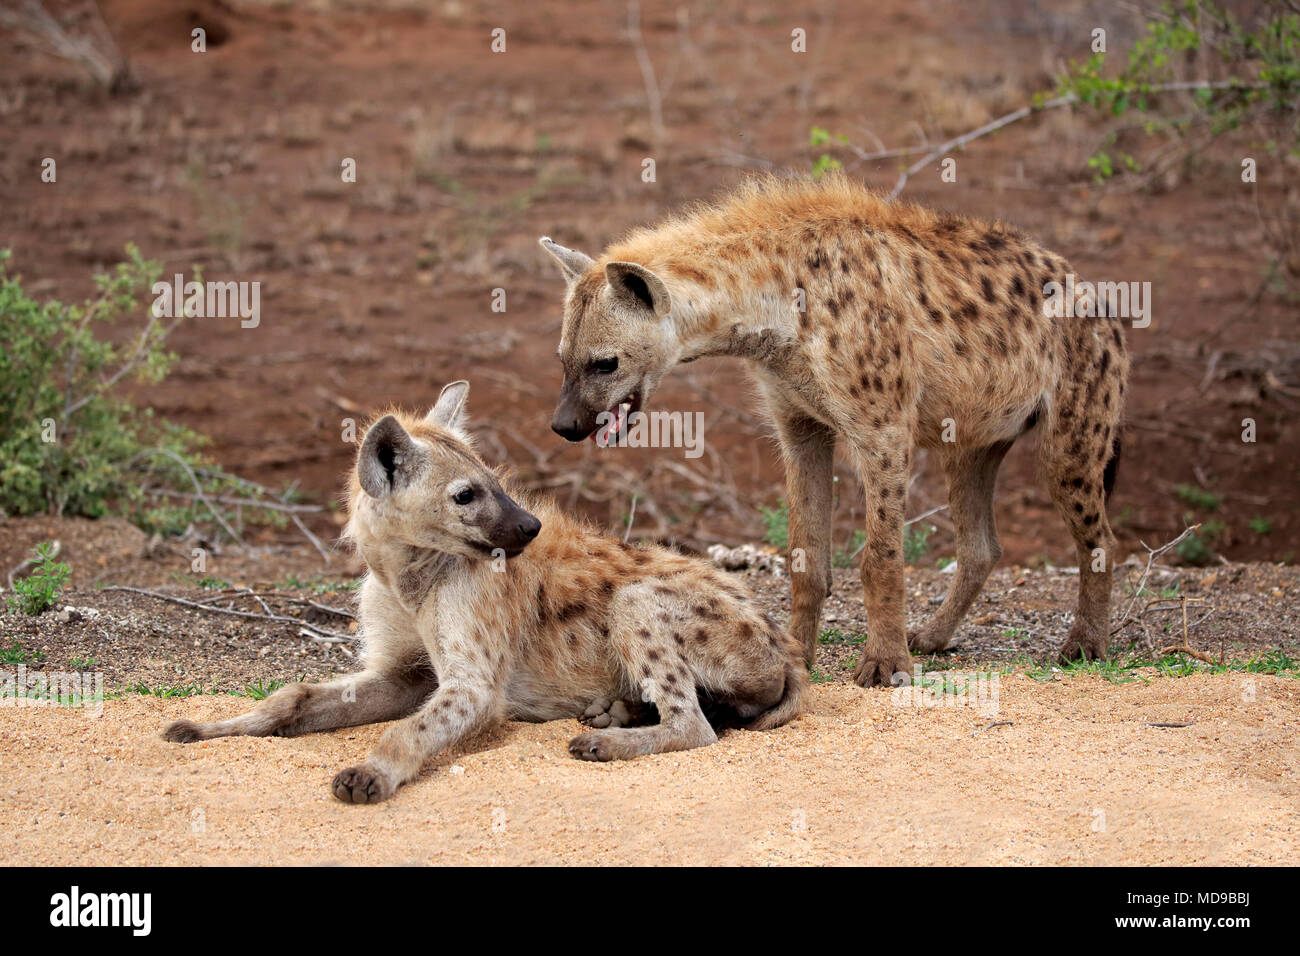 Two Spotted hyenas (Crocuta crocuta), social behaviour, Kruger National Park, South Africa Stock Photo